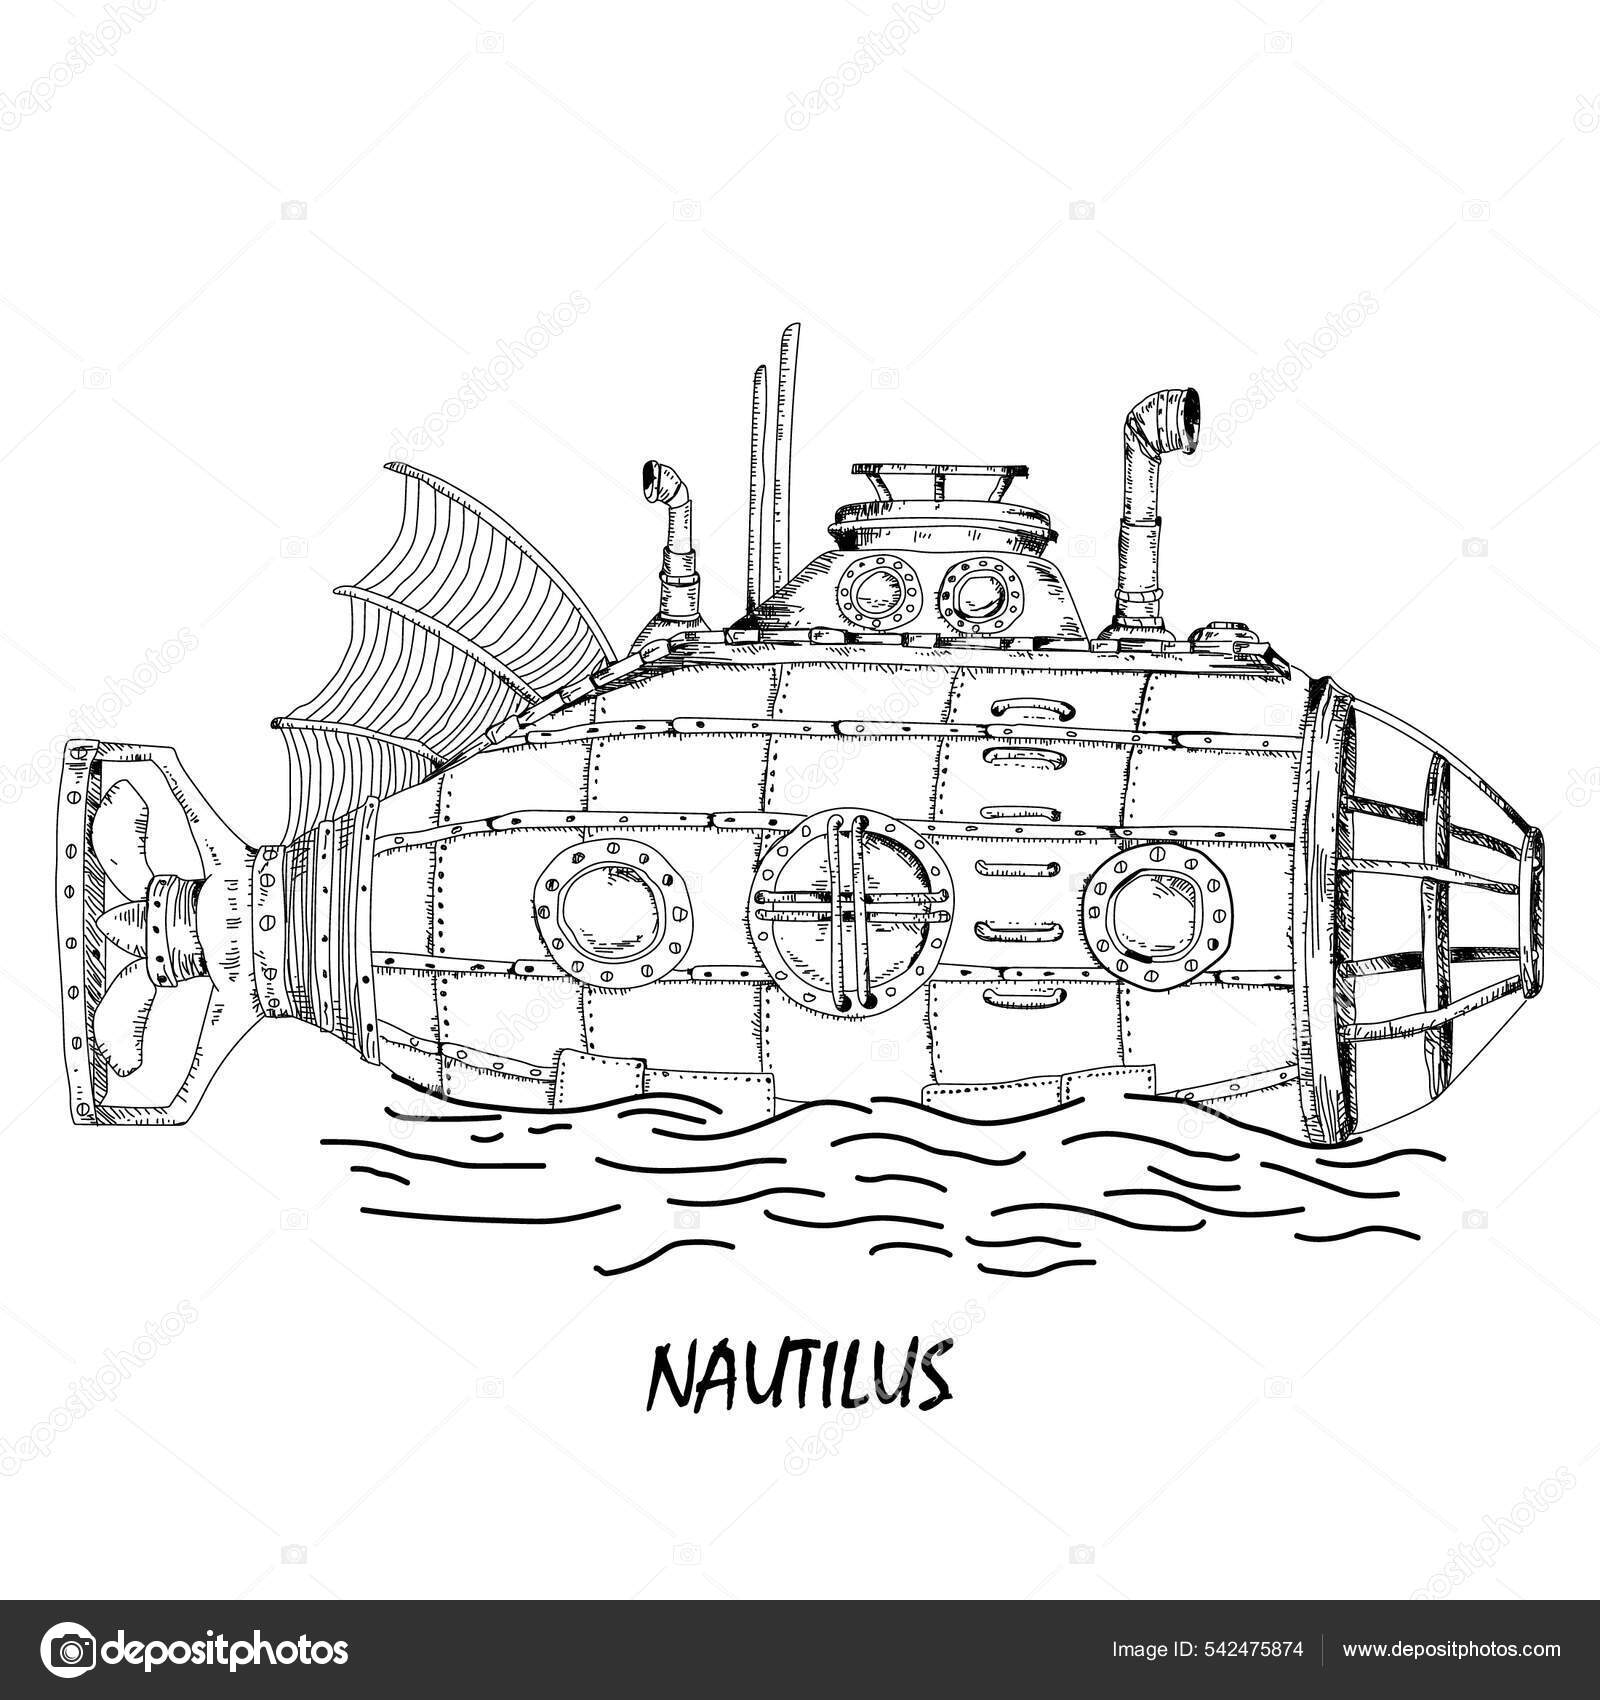 Vector cartoon drawing of a submarine  Stock Illustration 62523403   PIXTA